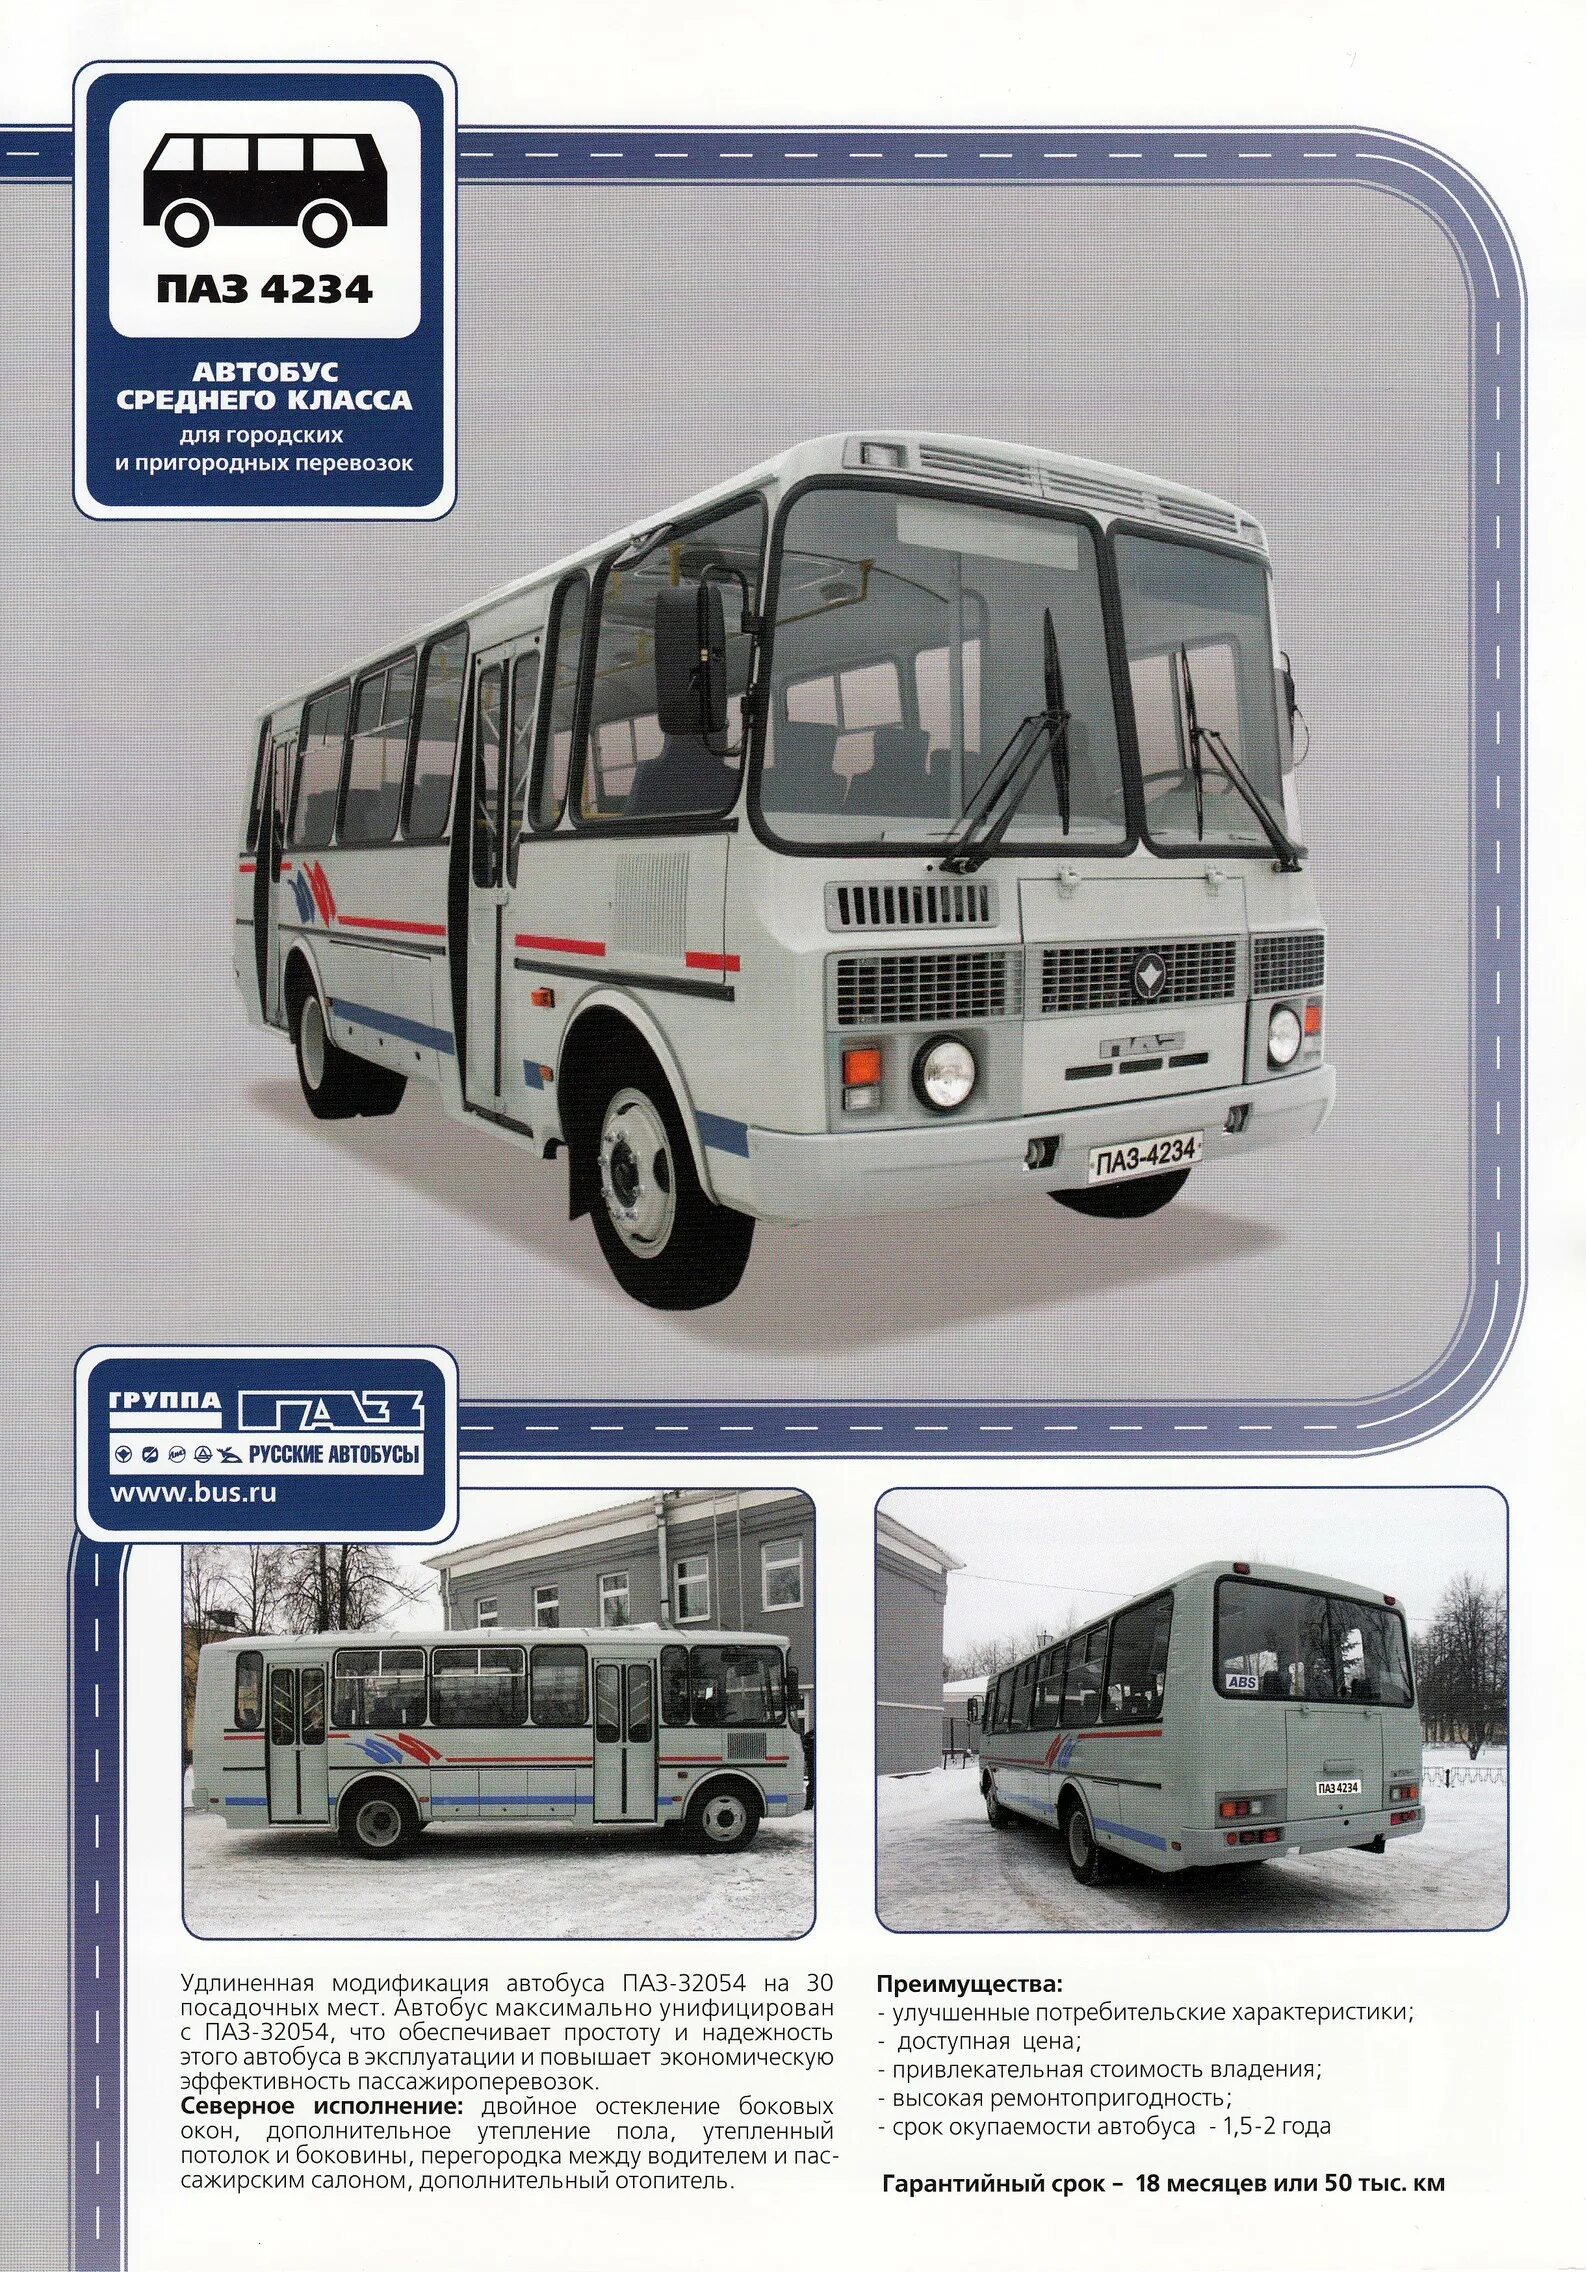 Технические характеристики автобуса паз. Габариты автобуса ПАЗ 4234. ПАЗ 4234 И 3205. ПАЗ-3205 автобус характеристики. ТТХ автобуса ПАЗ 4234.